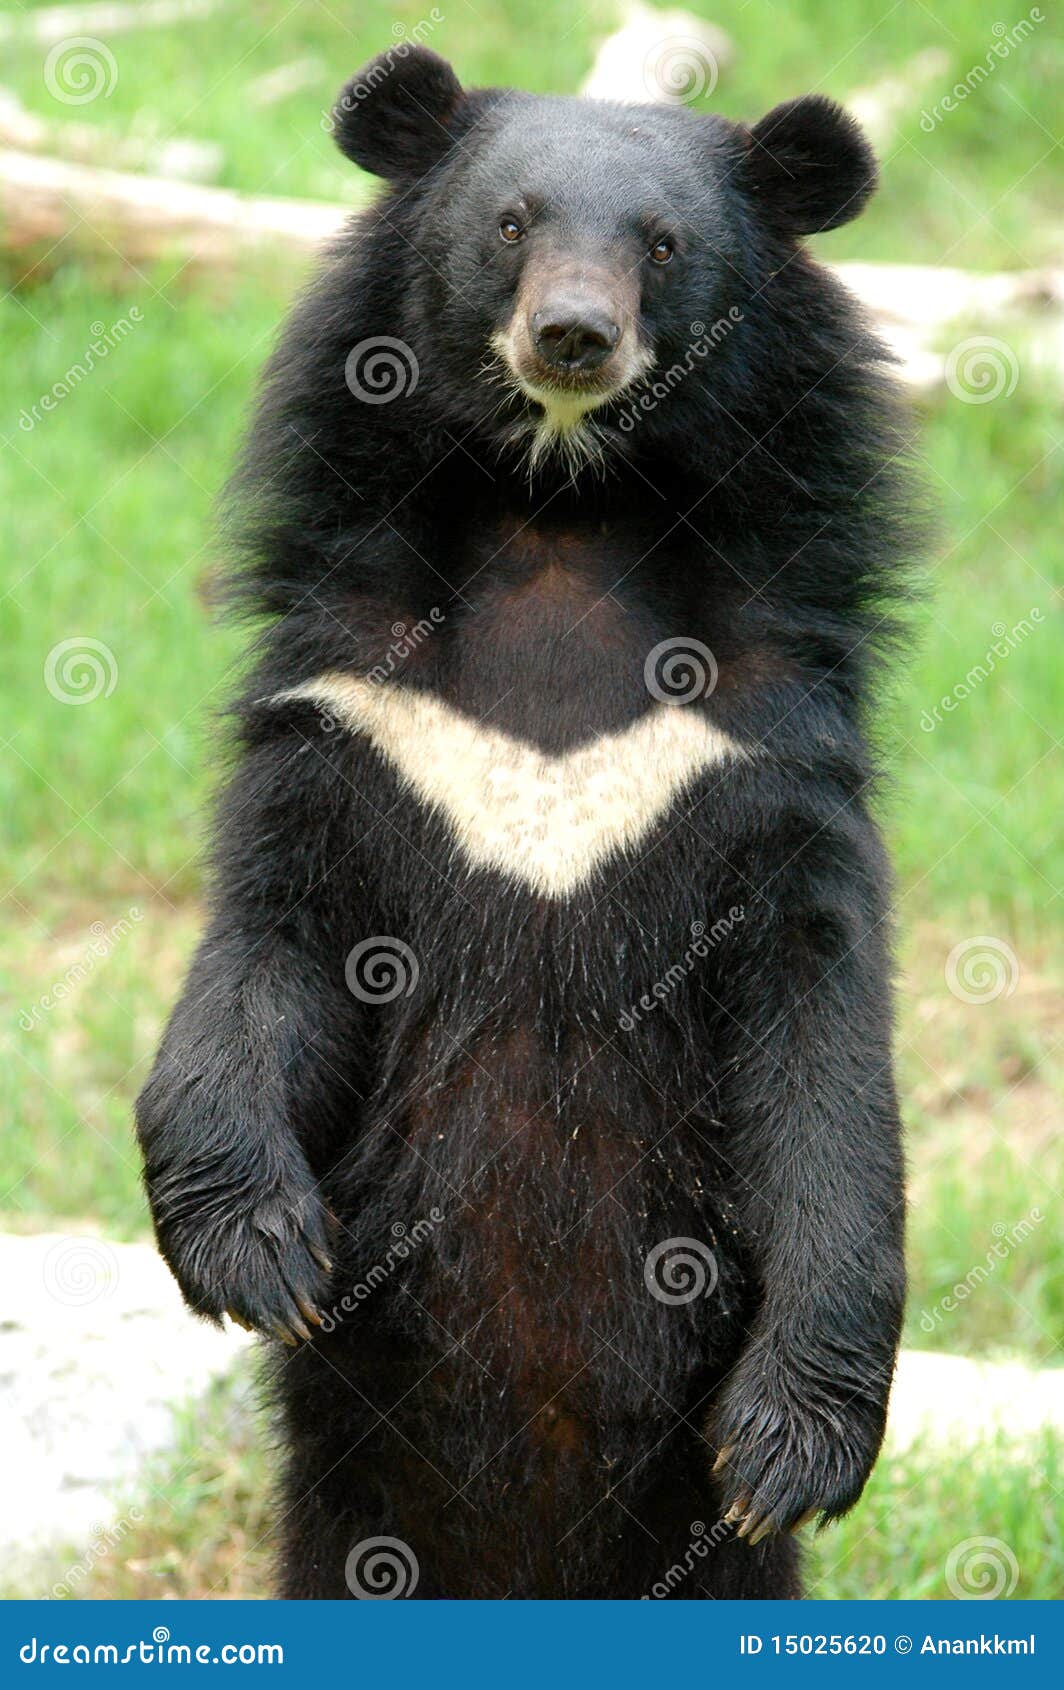 asiatic black bear